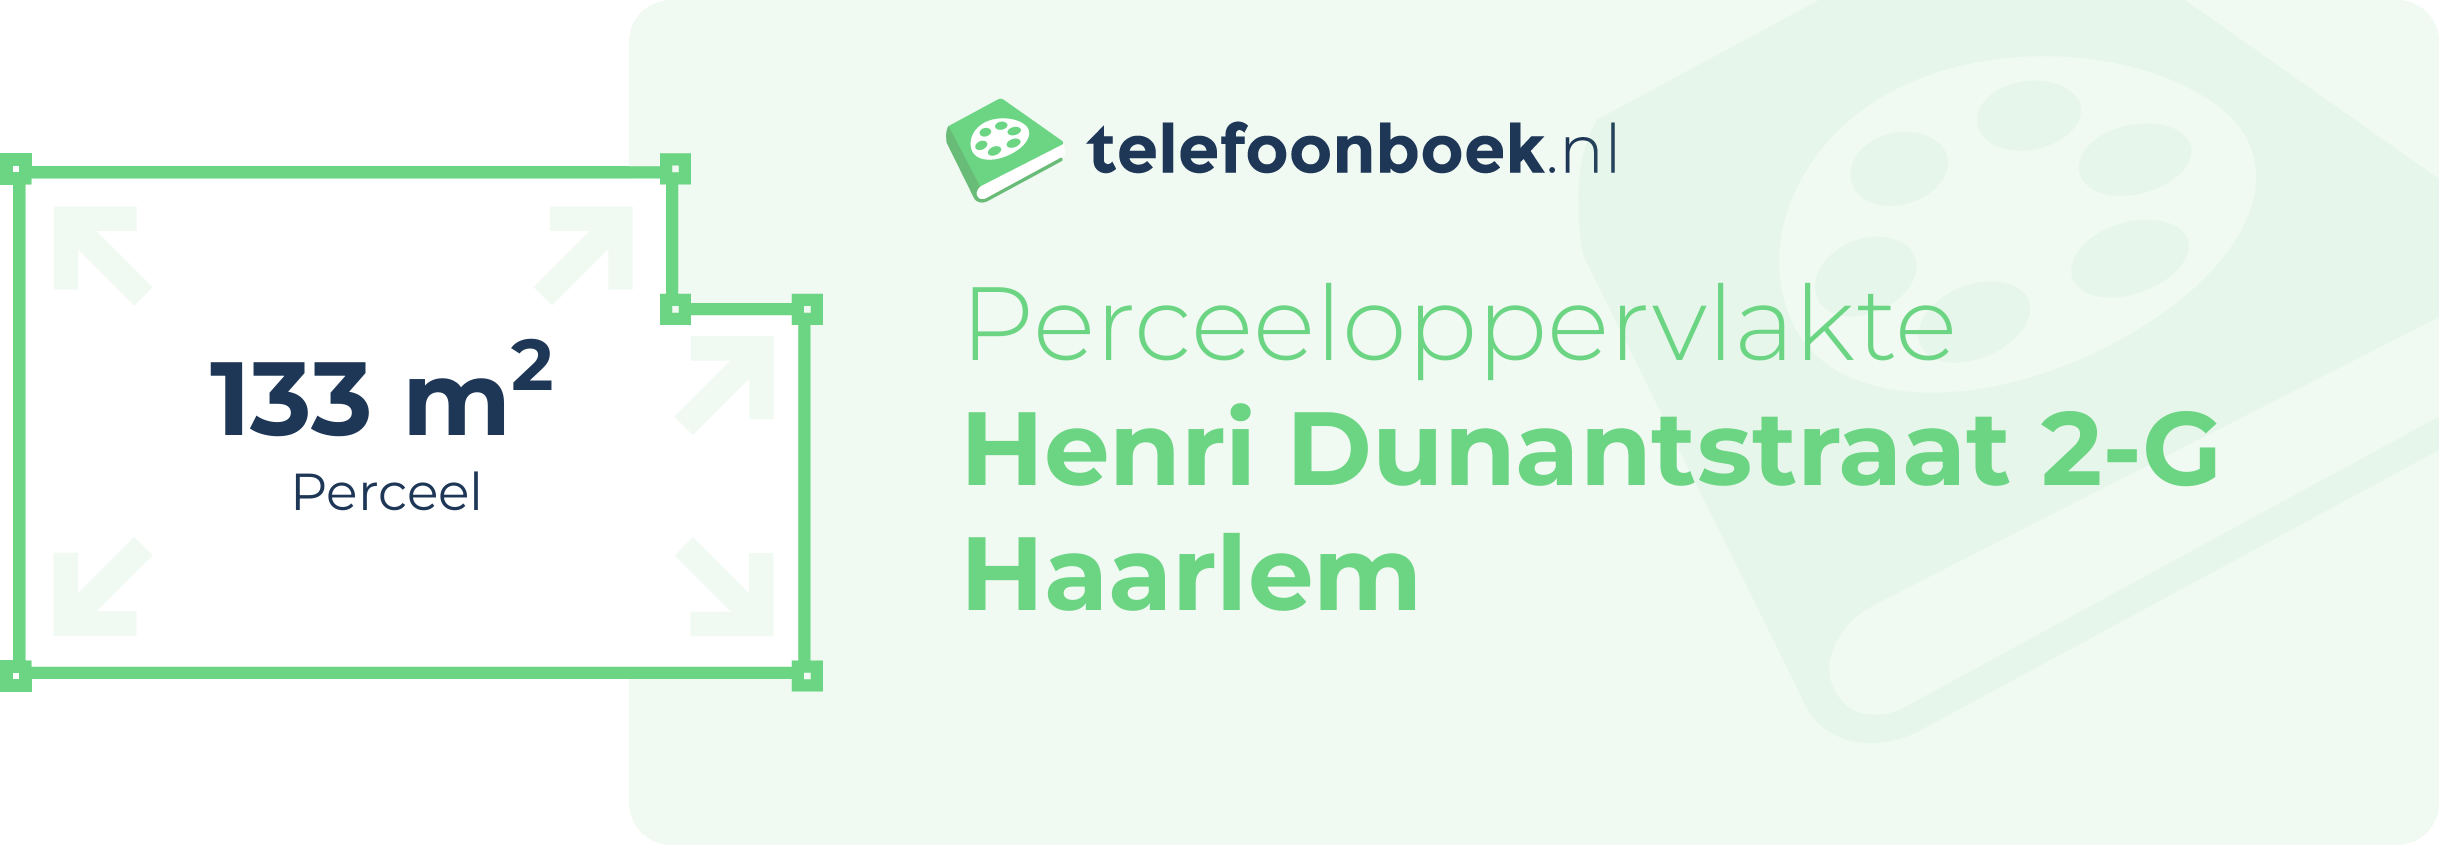 Perceeloppervlakte Henri Dunantstraat 2-G Haarlem